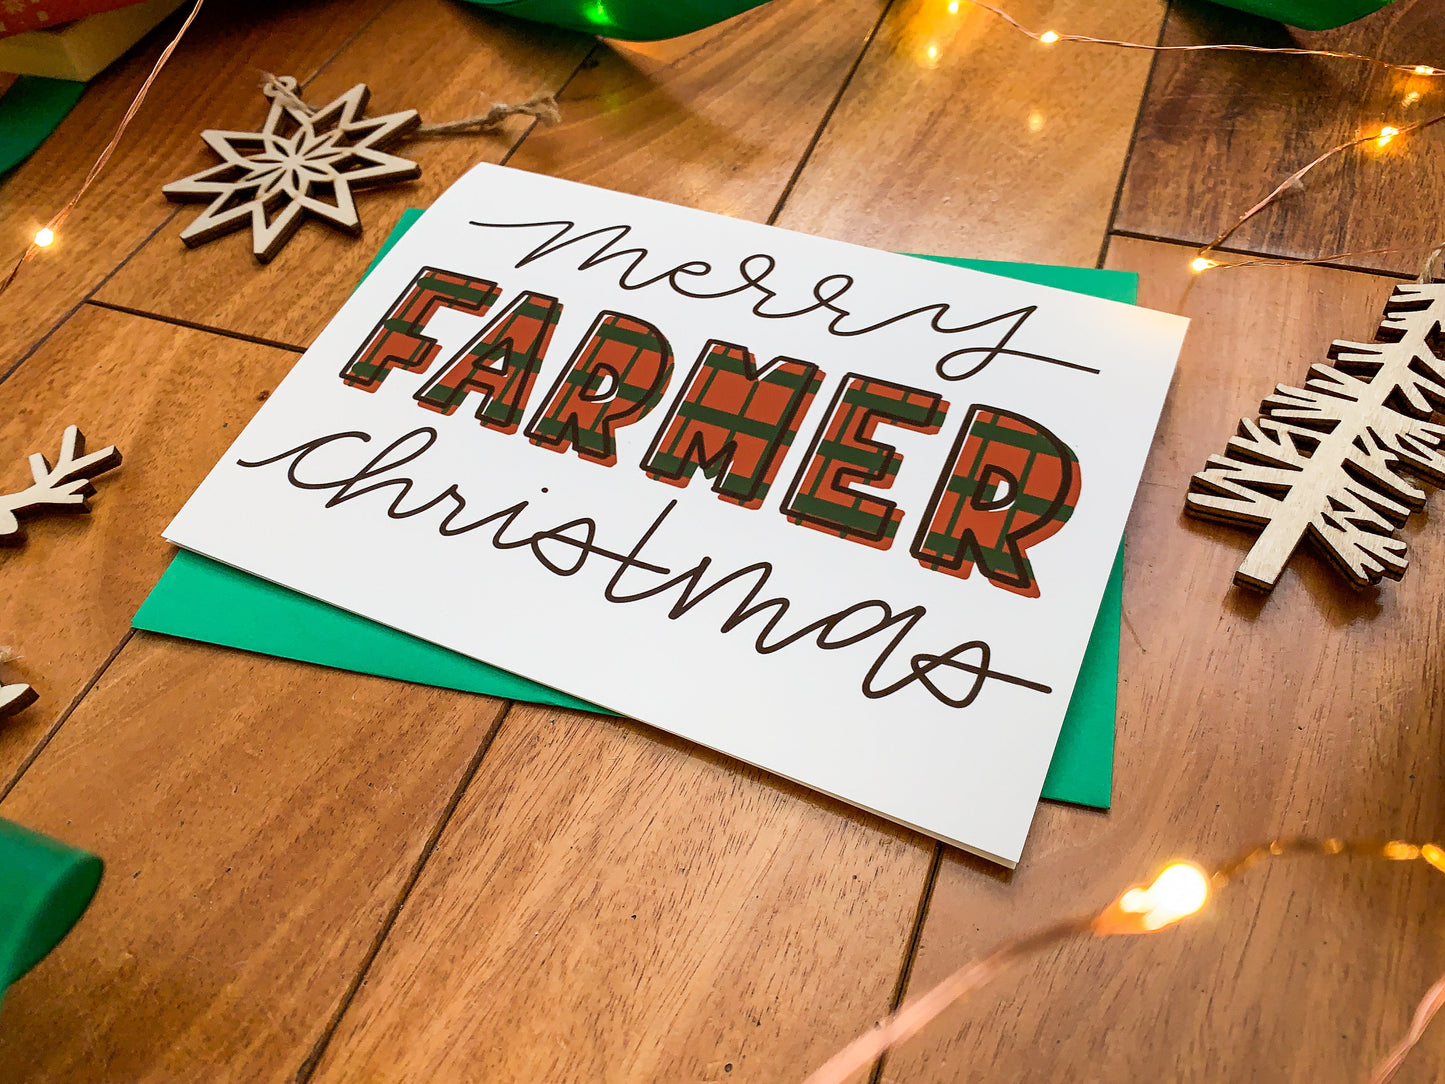 Handmade Merry Farmer Christmas Agriculture Holiday Card by StoneDonut Design